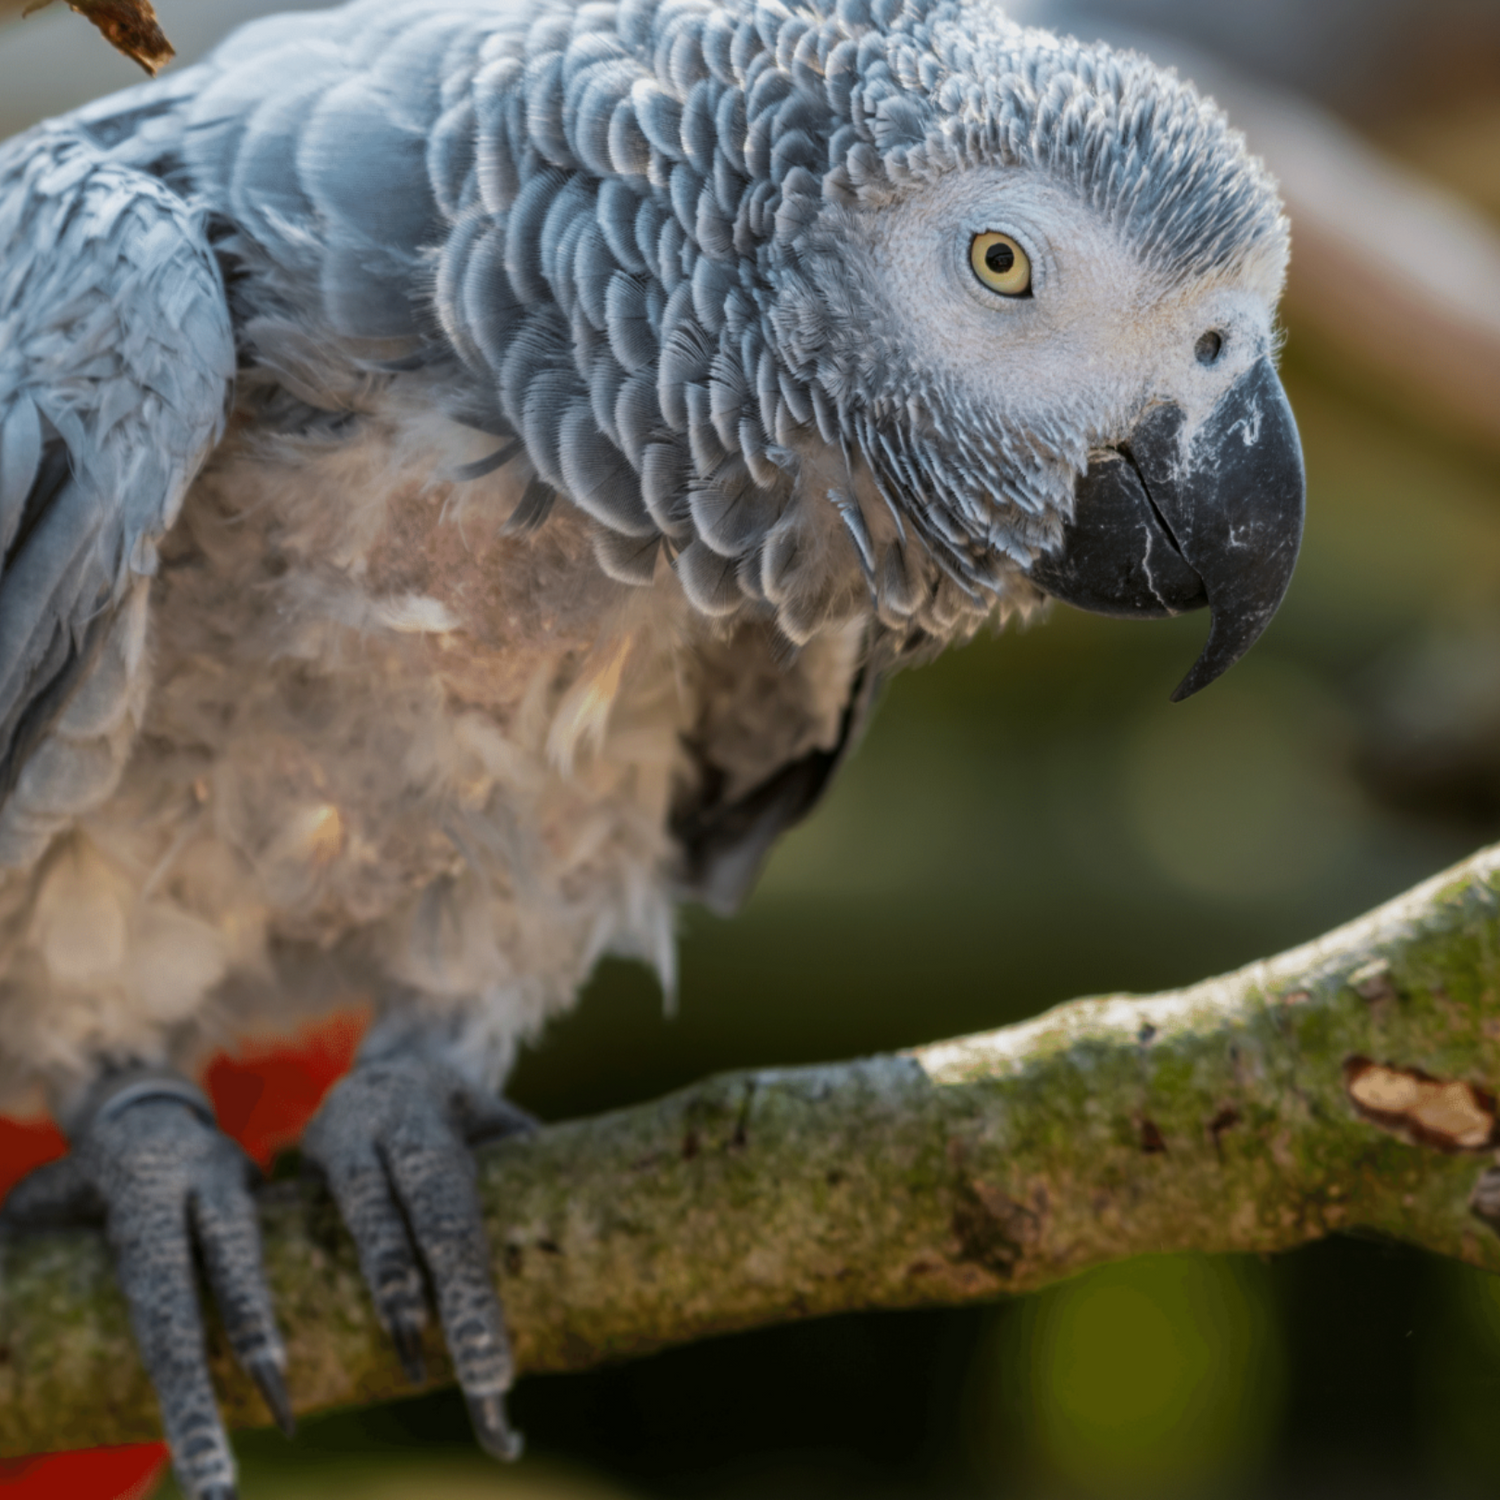 Parrots who pluck